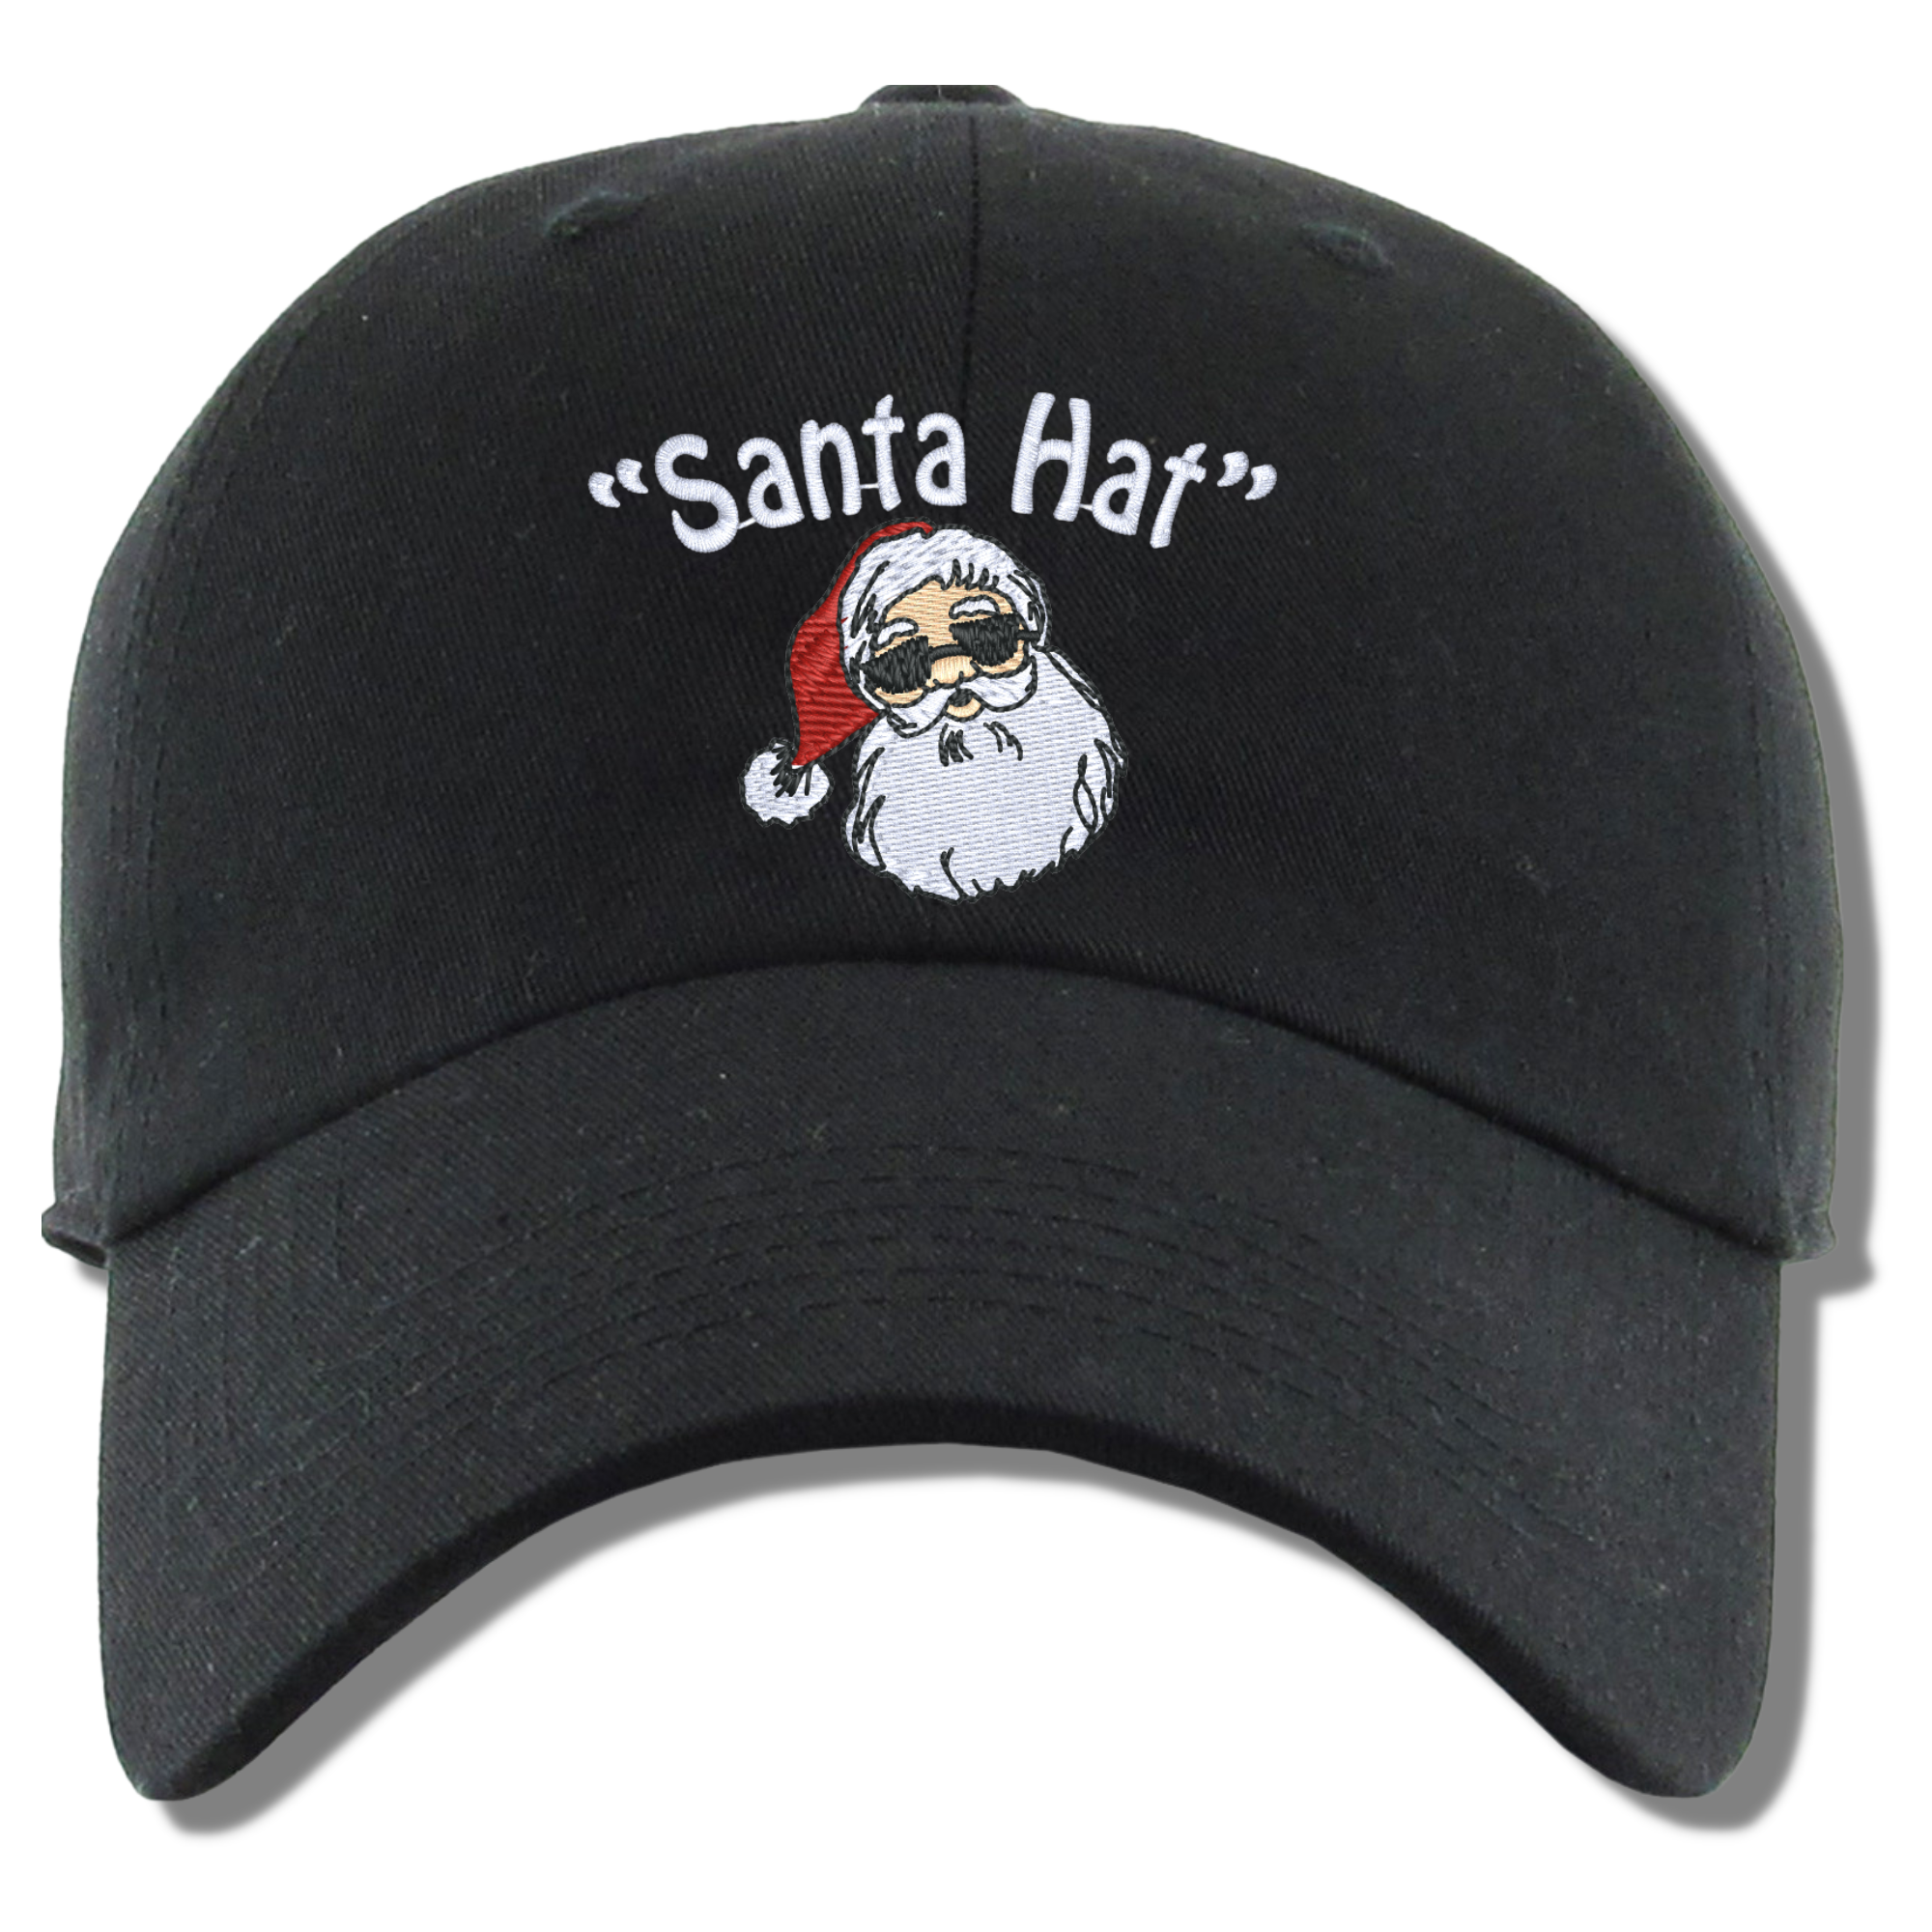 "Santa Hat" Black Dad Hat, One Size Fits All